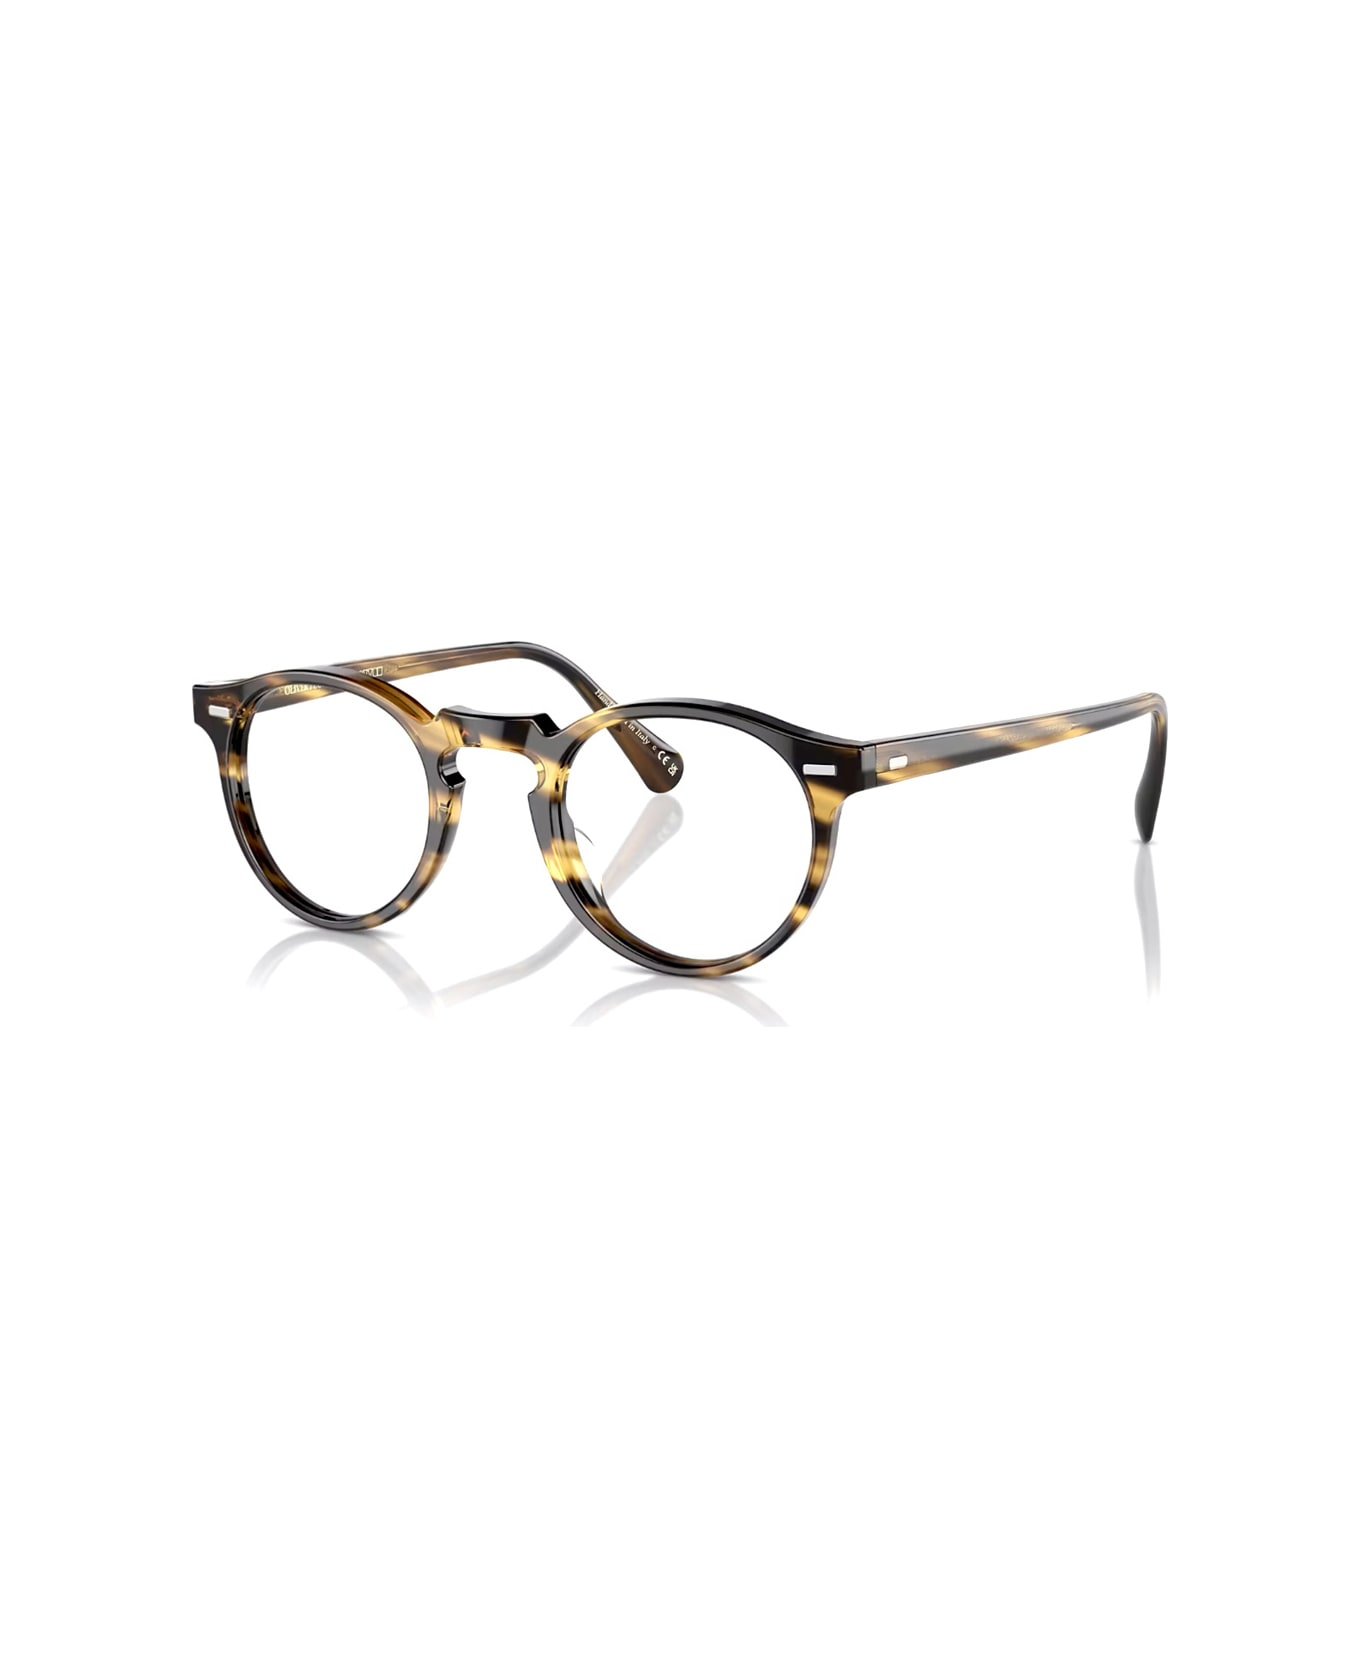 Oliver Peoples Ov5186 - Gregory Peck 1003 Glasses - Marrone アイウェア